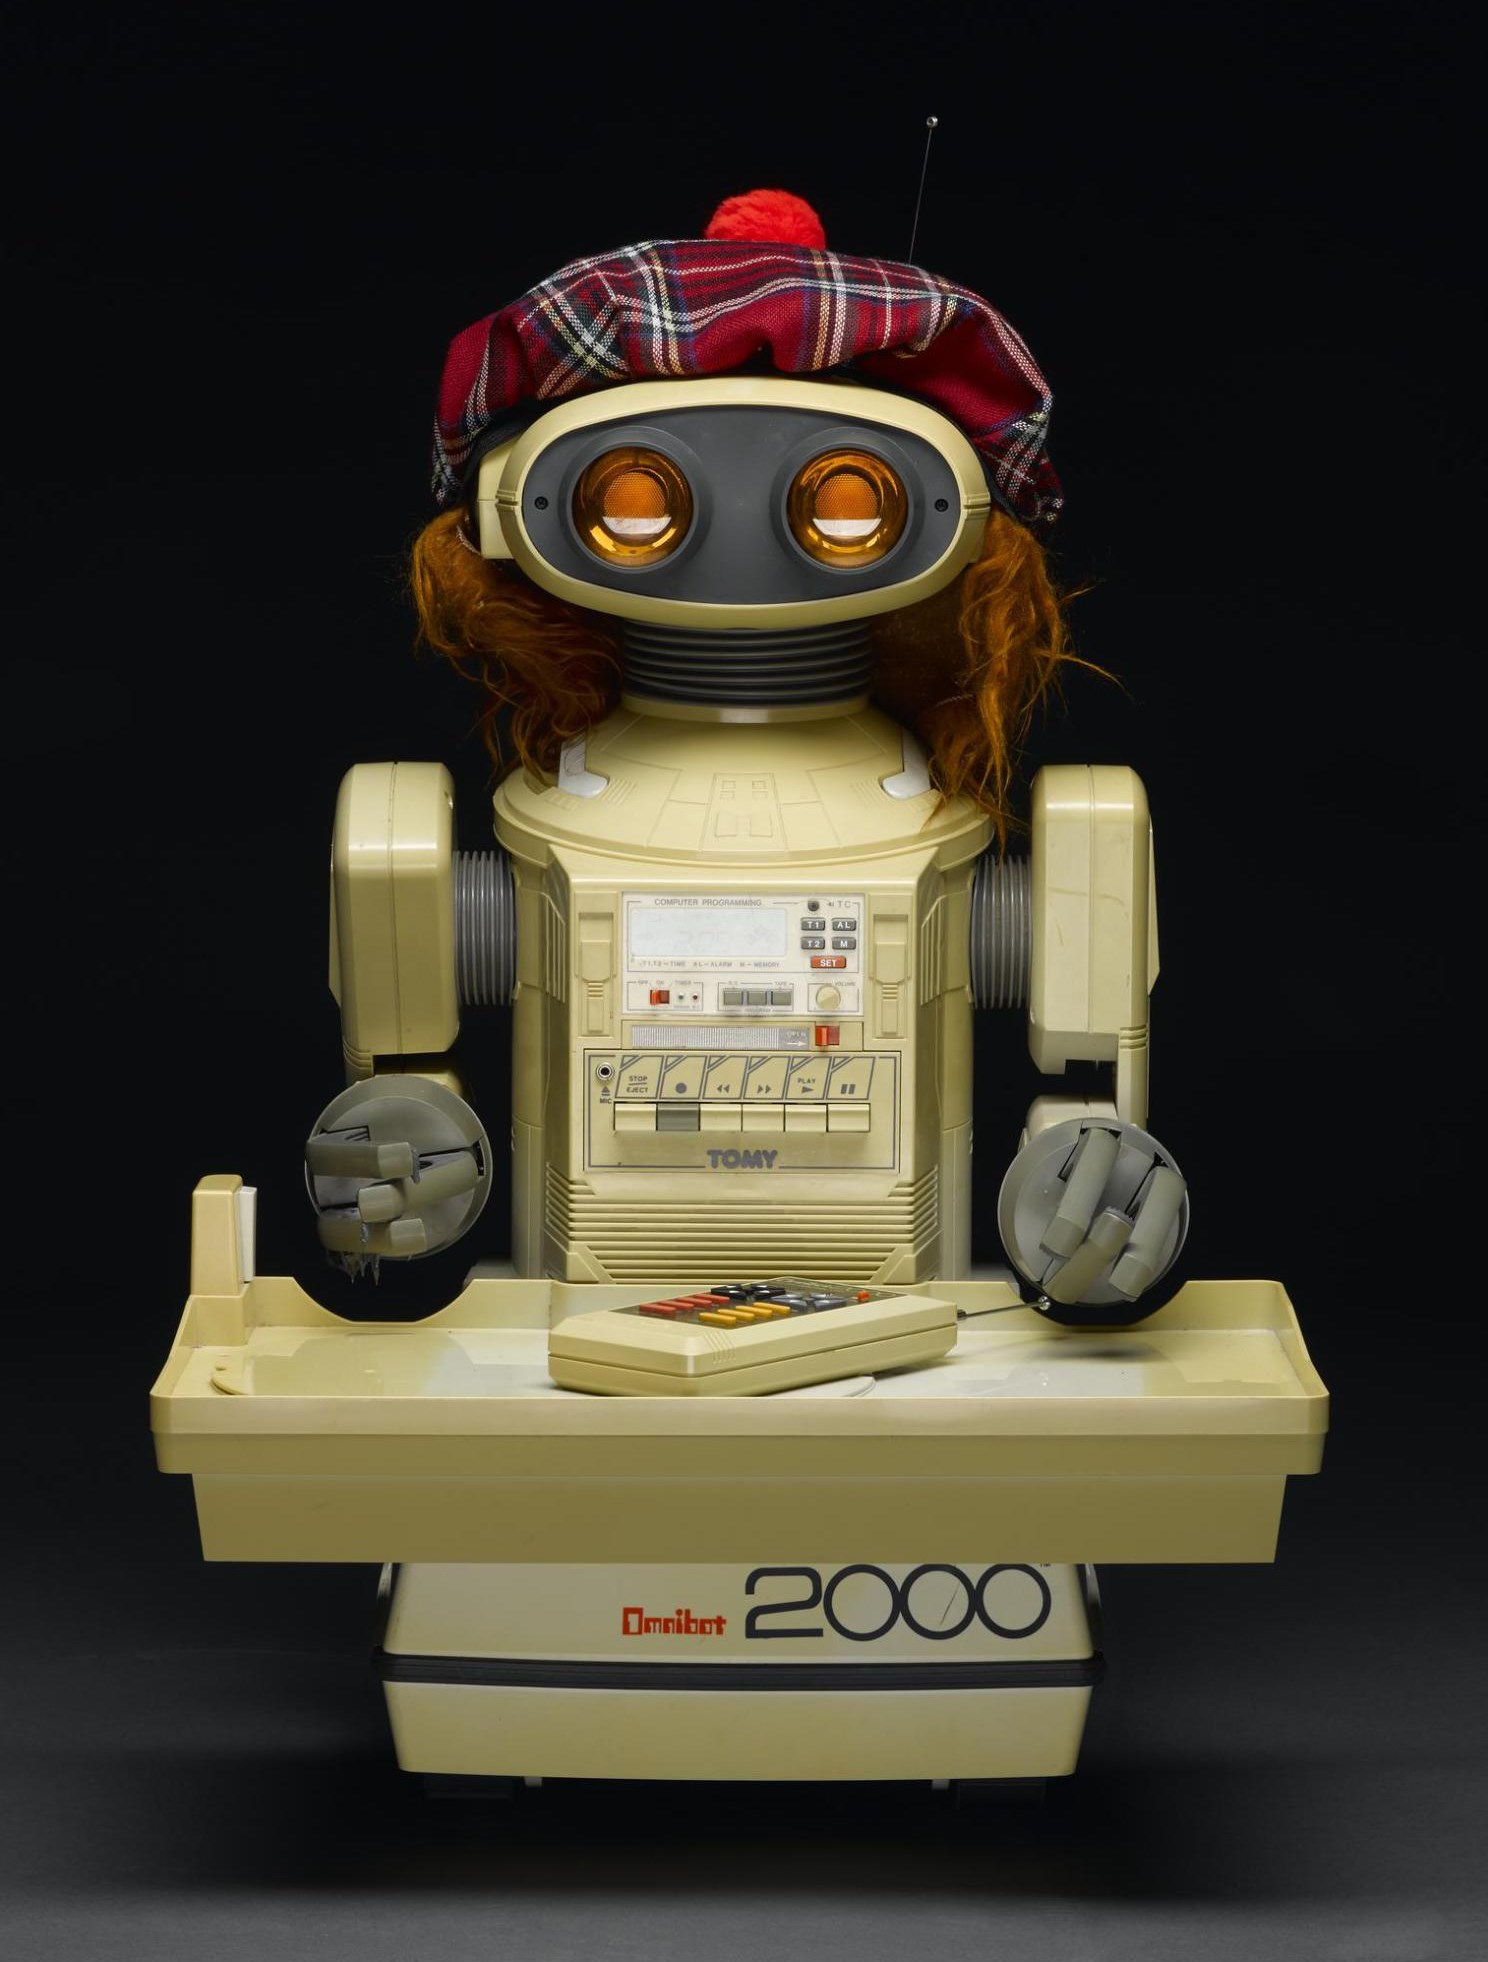 Omnibot 2000 wearing a tartan hat.